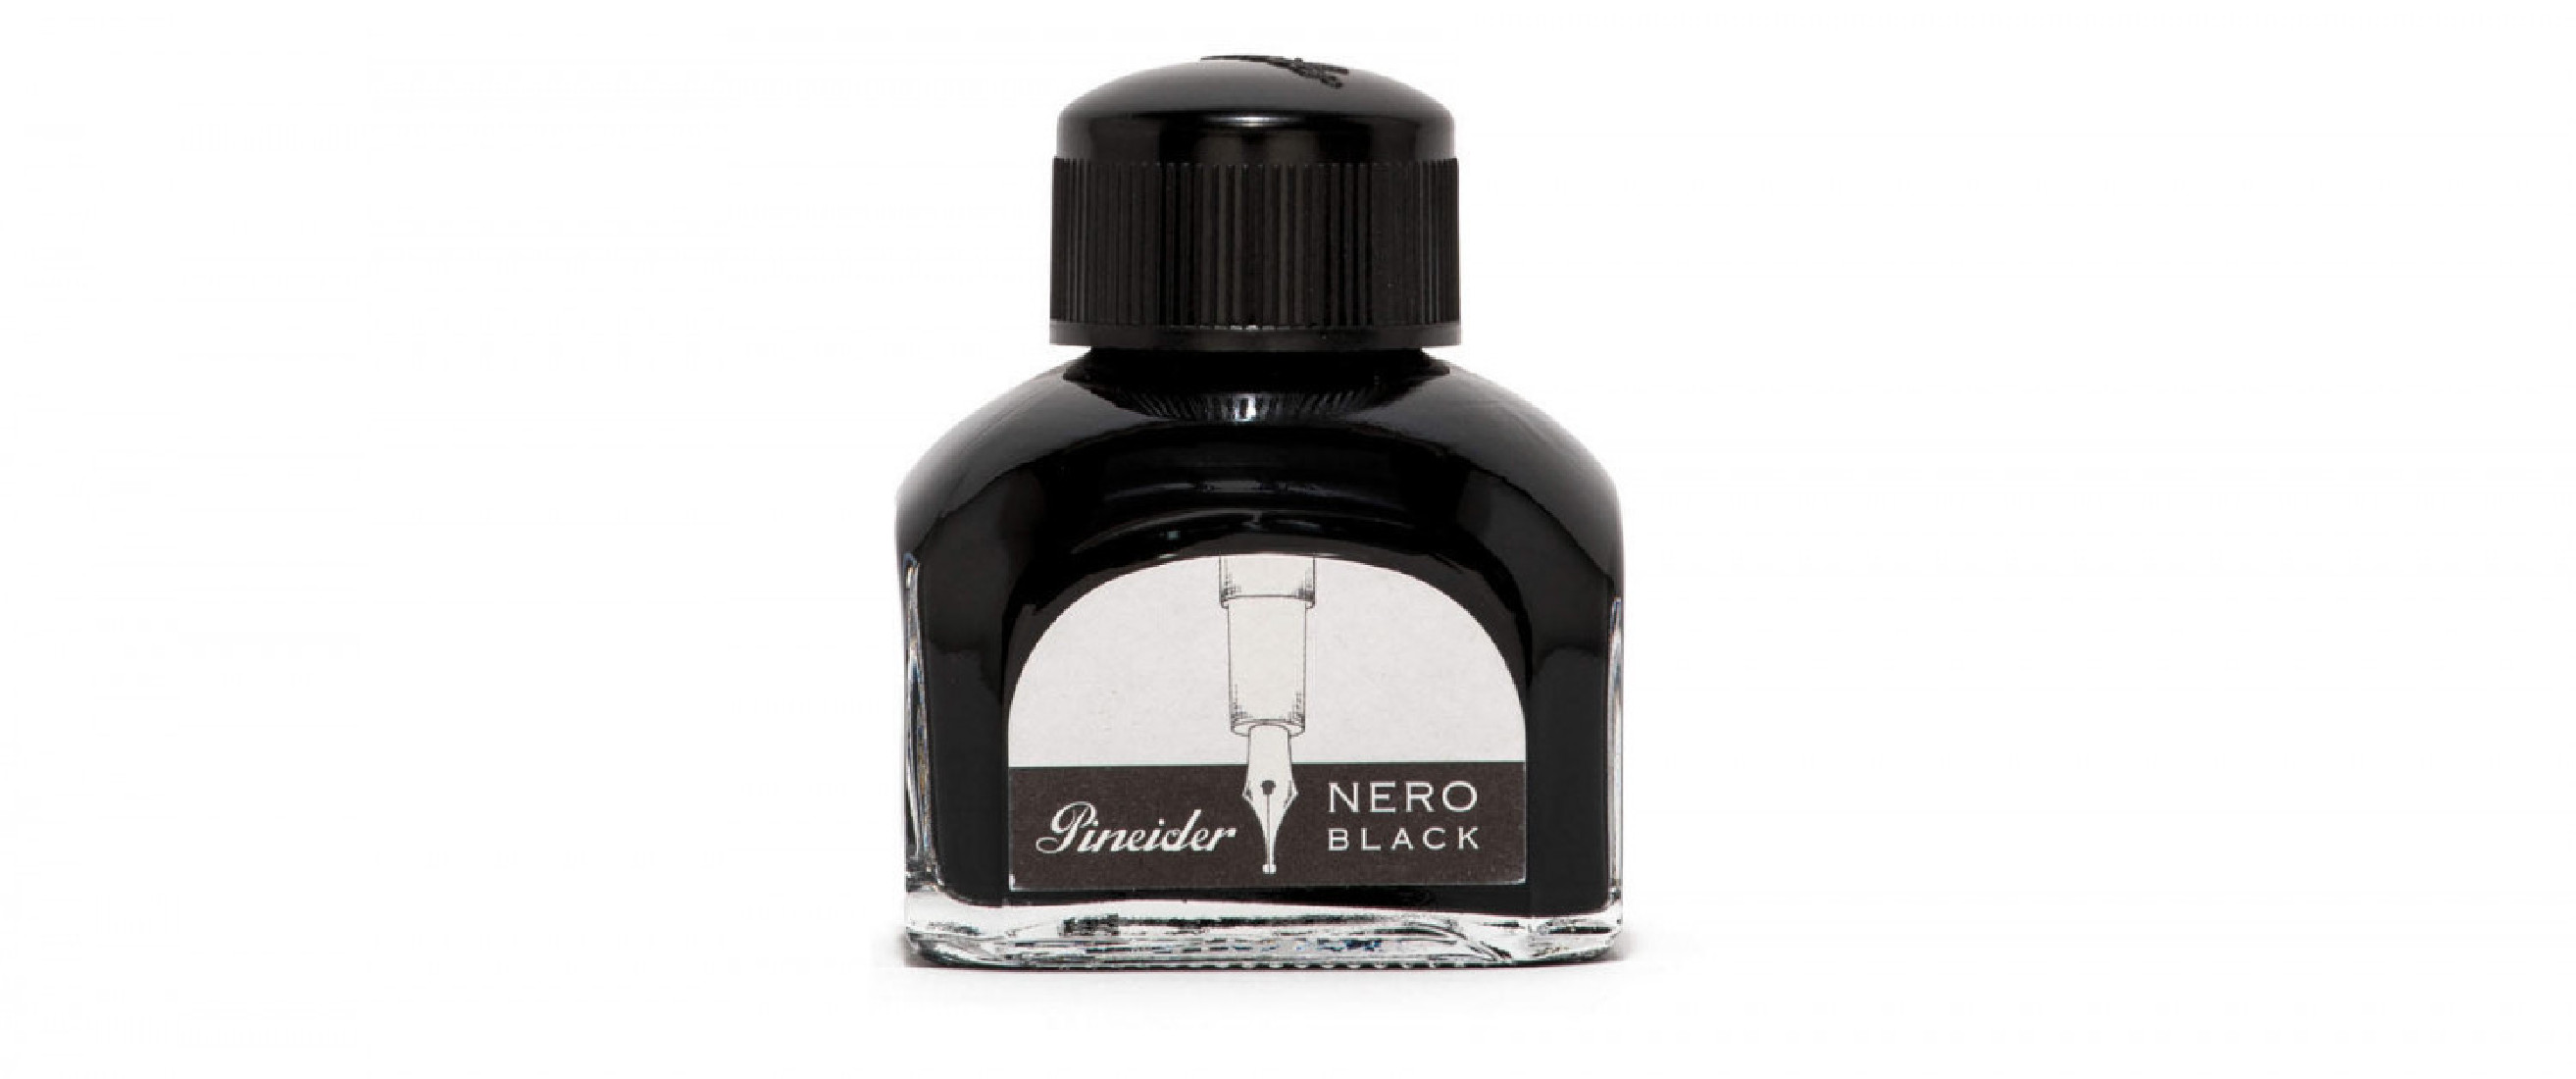 Pineider ink well 75ml black